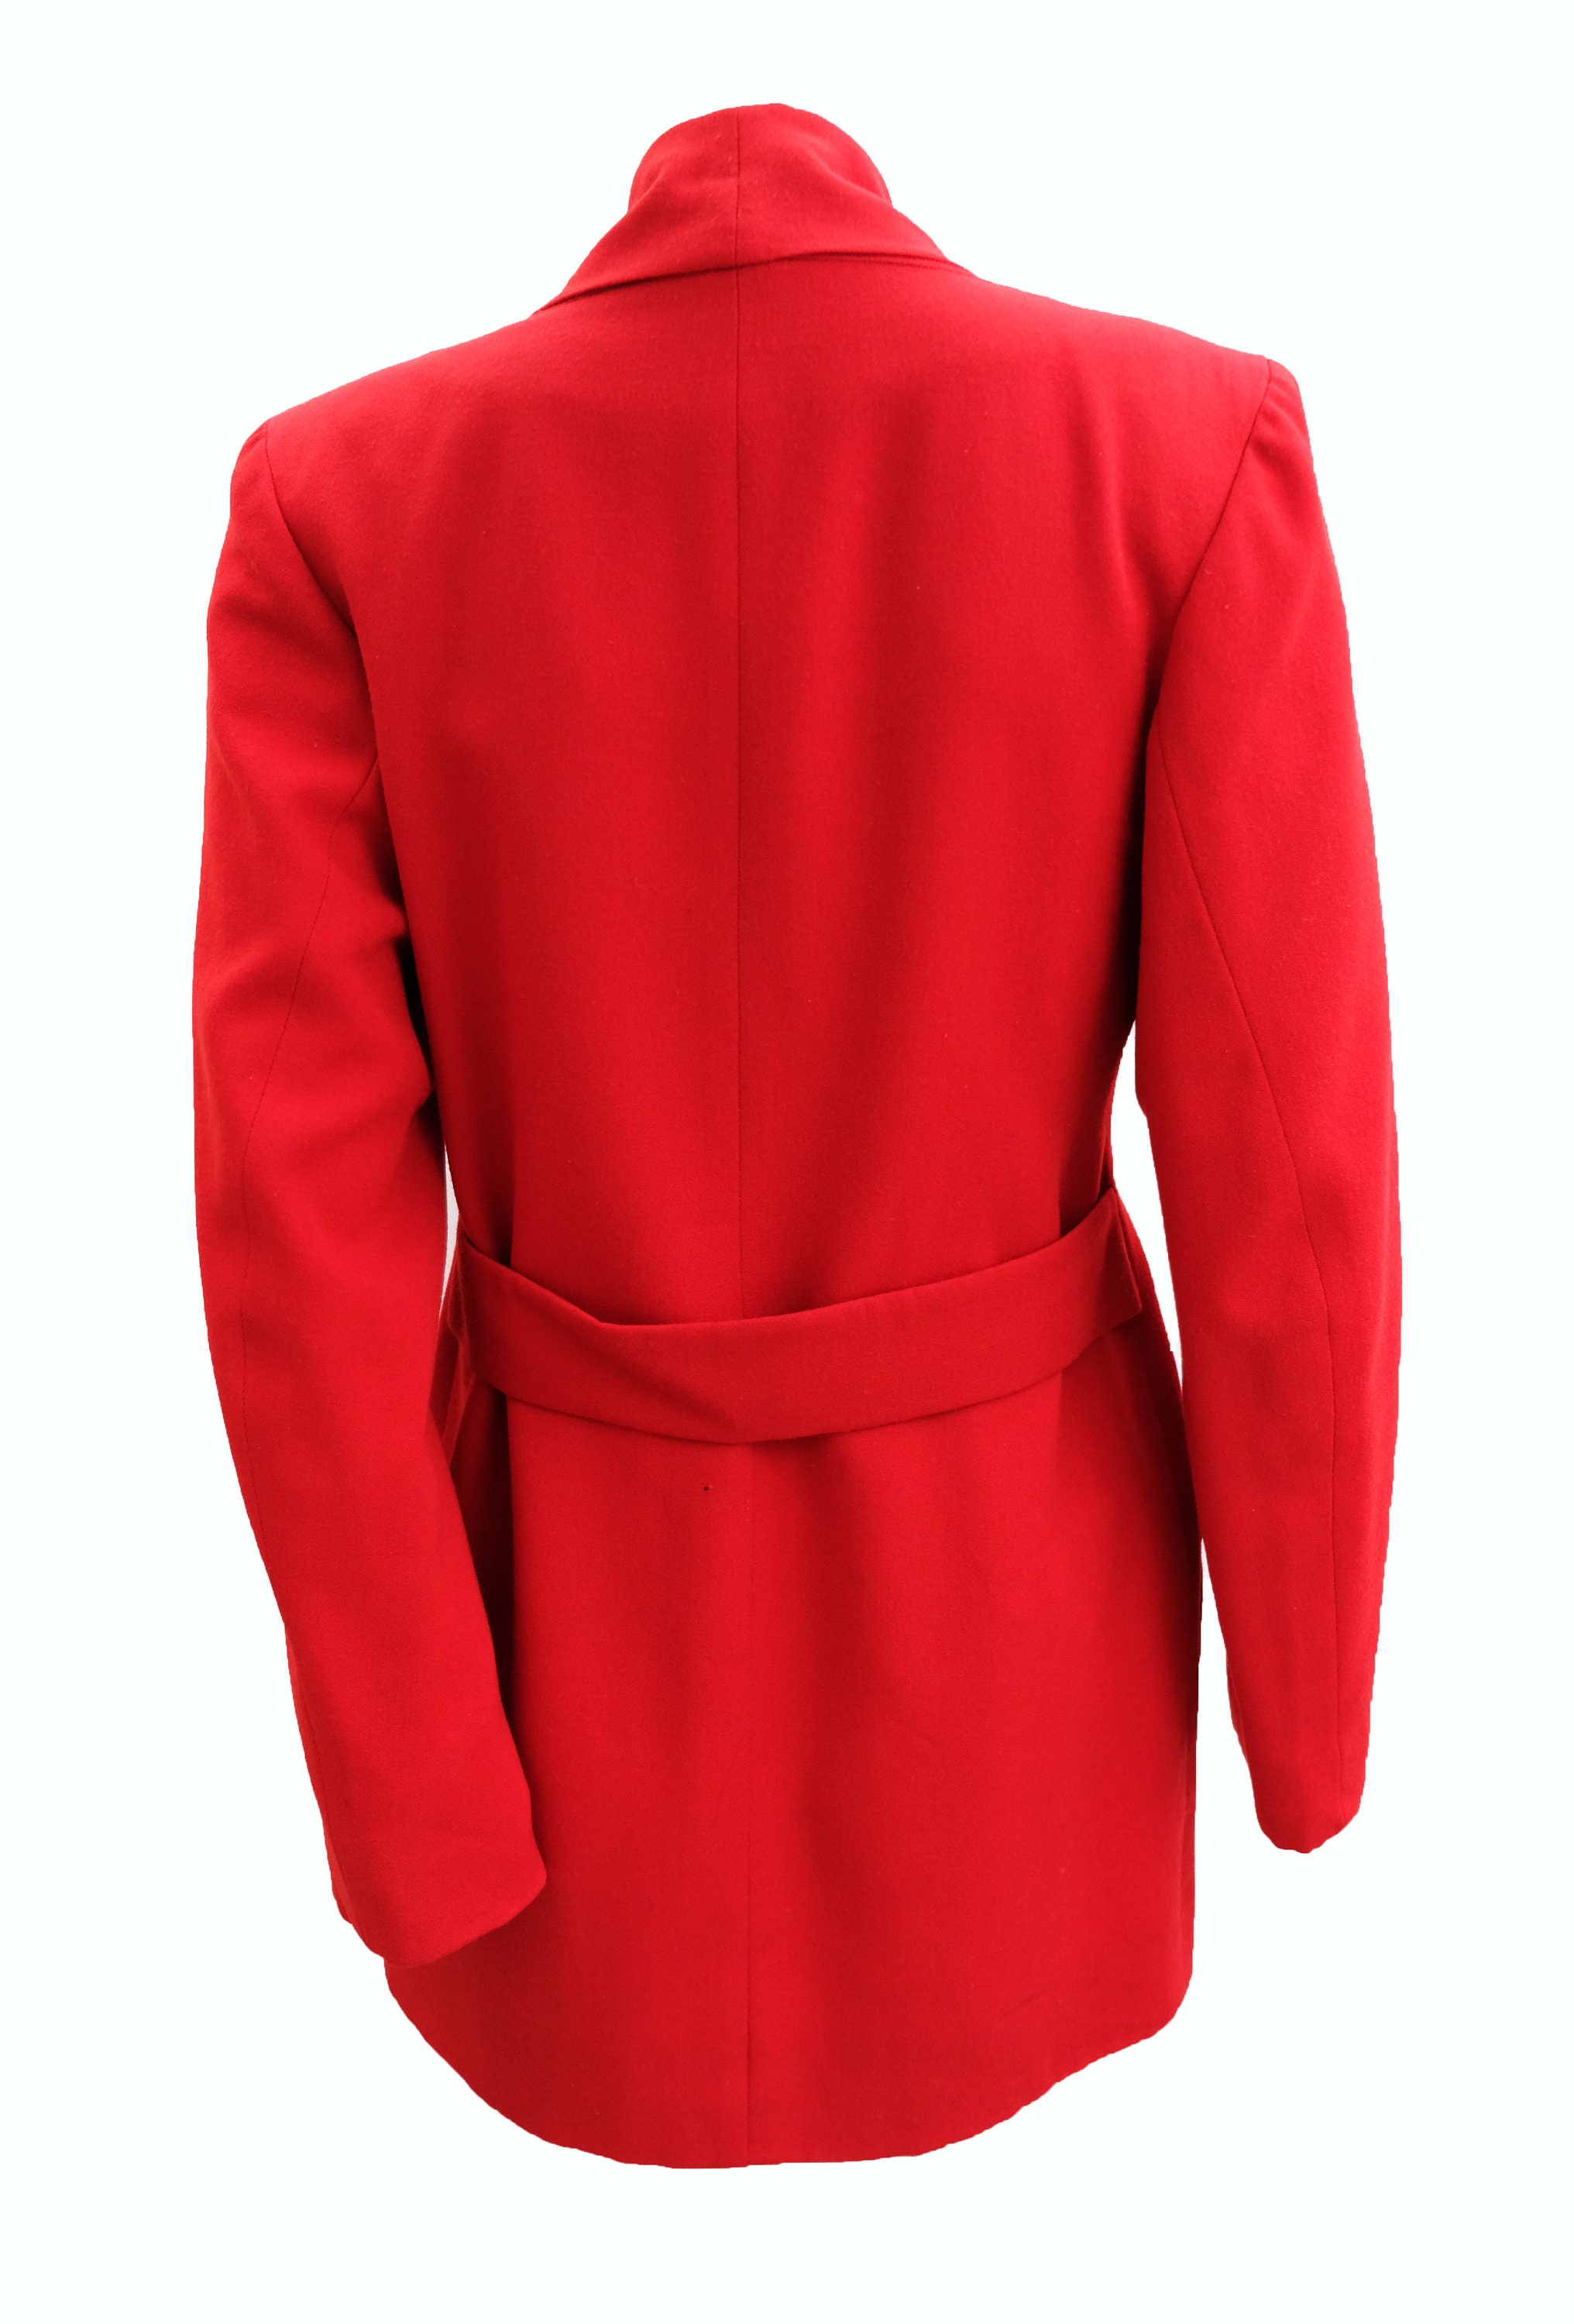 Vivienne Westwood Vintage Jacket in Red Wool With Gold | Etsy